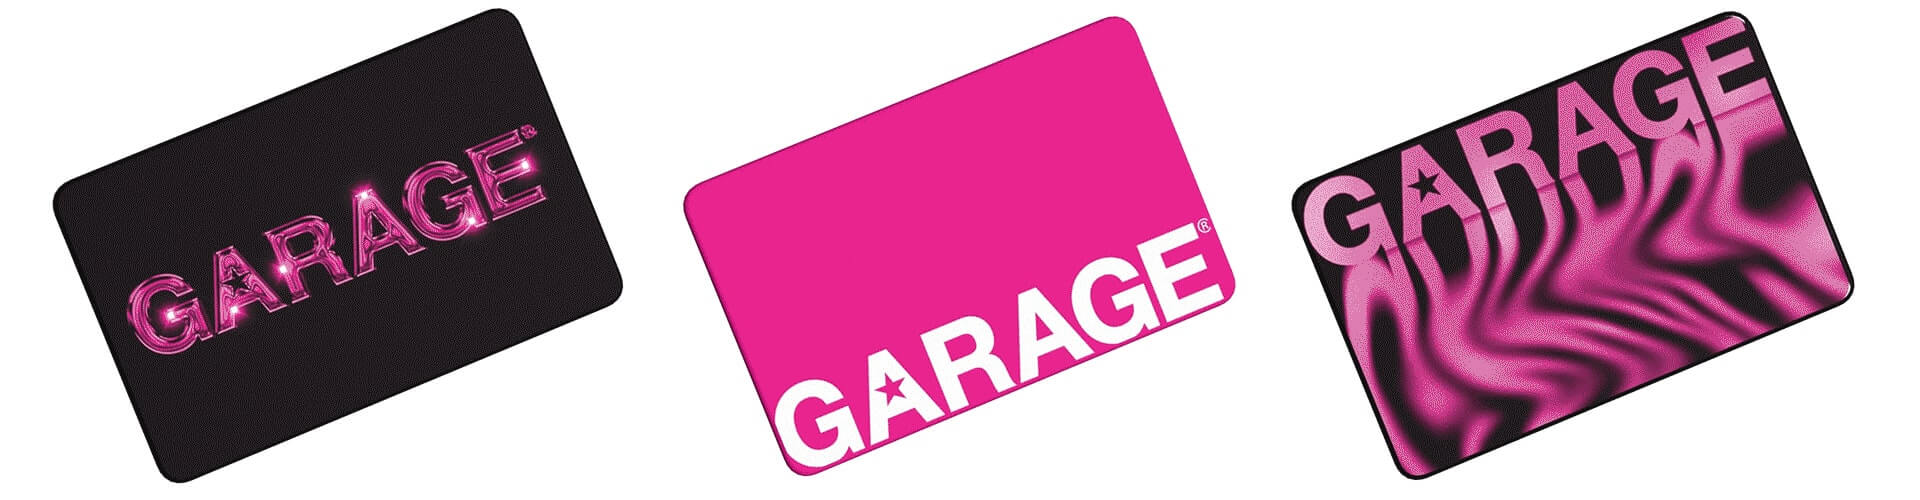 Garage gift cards